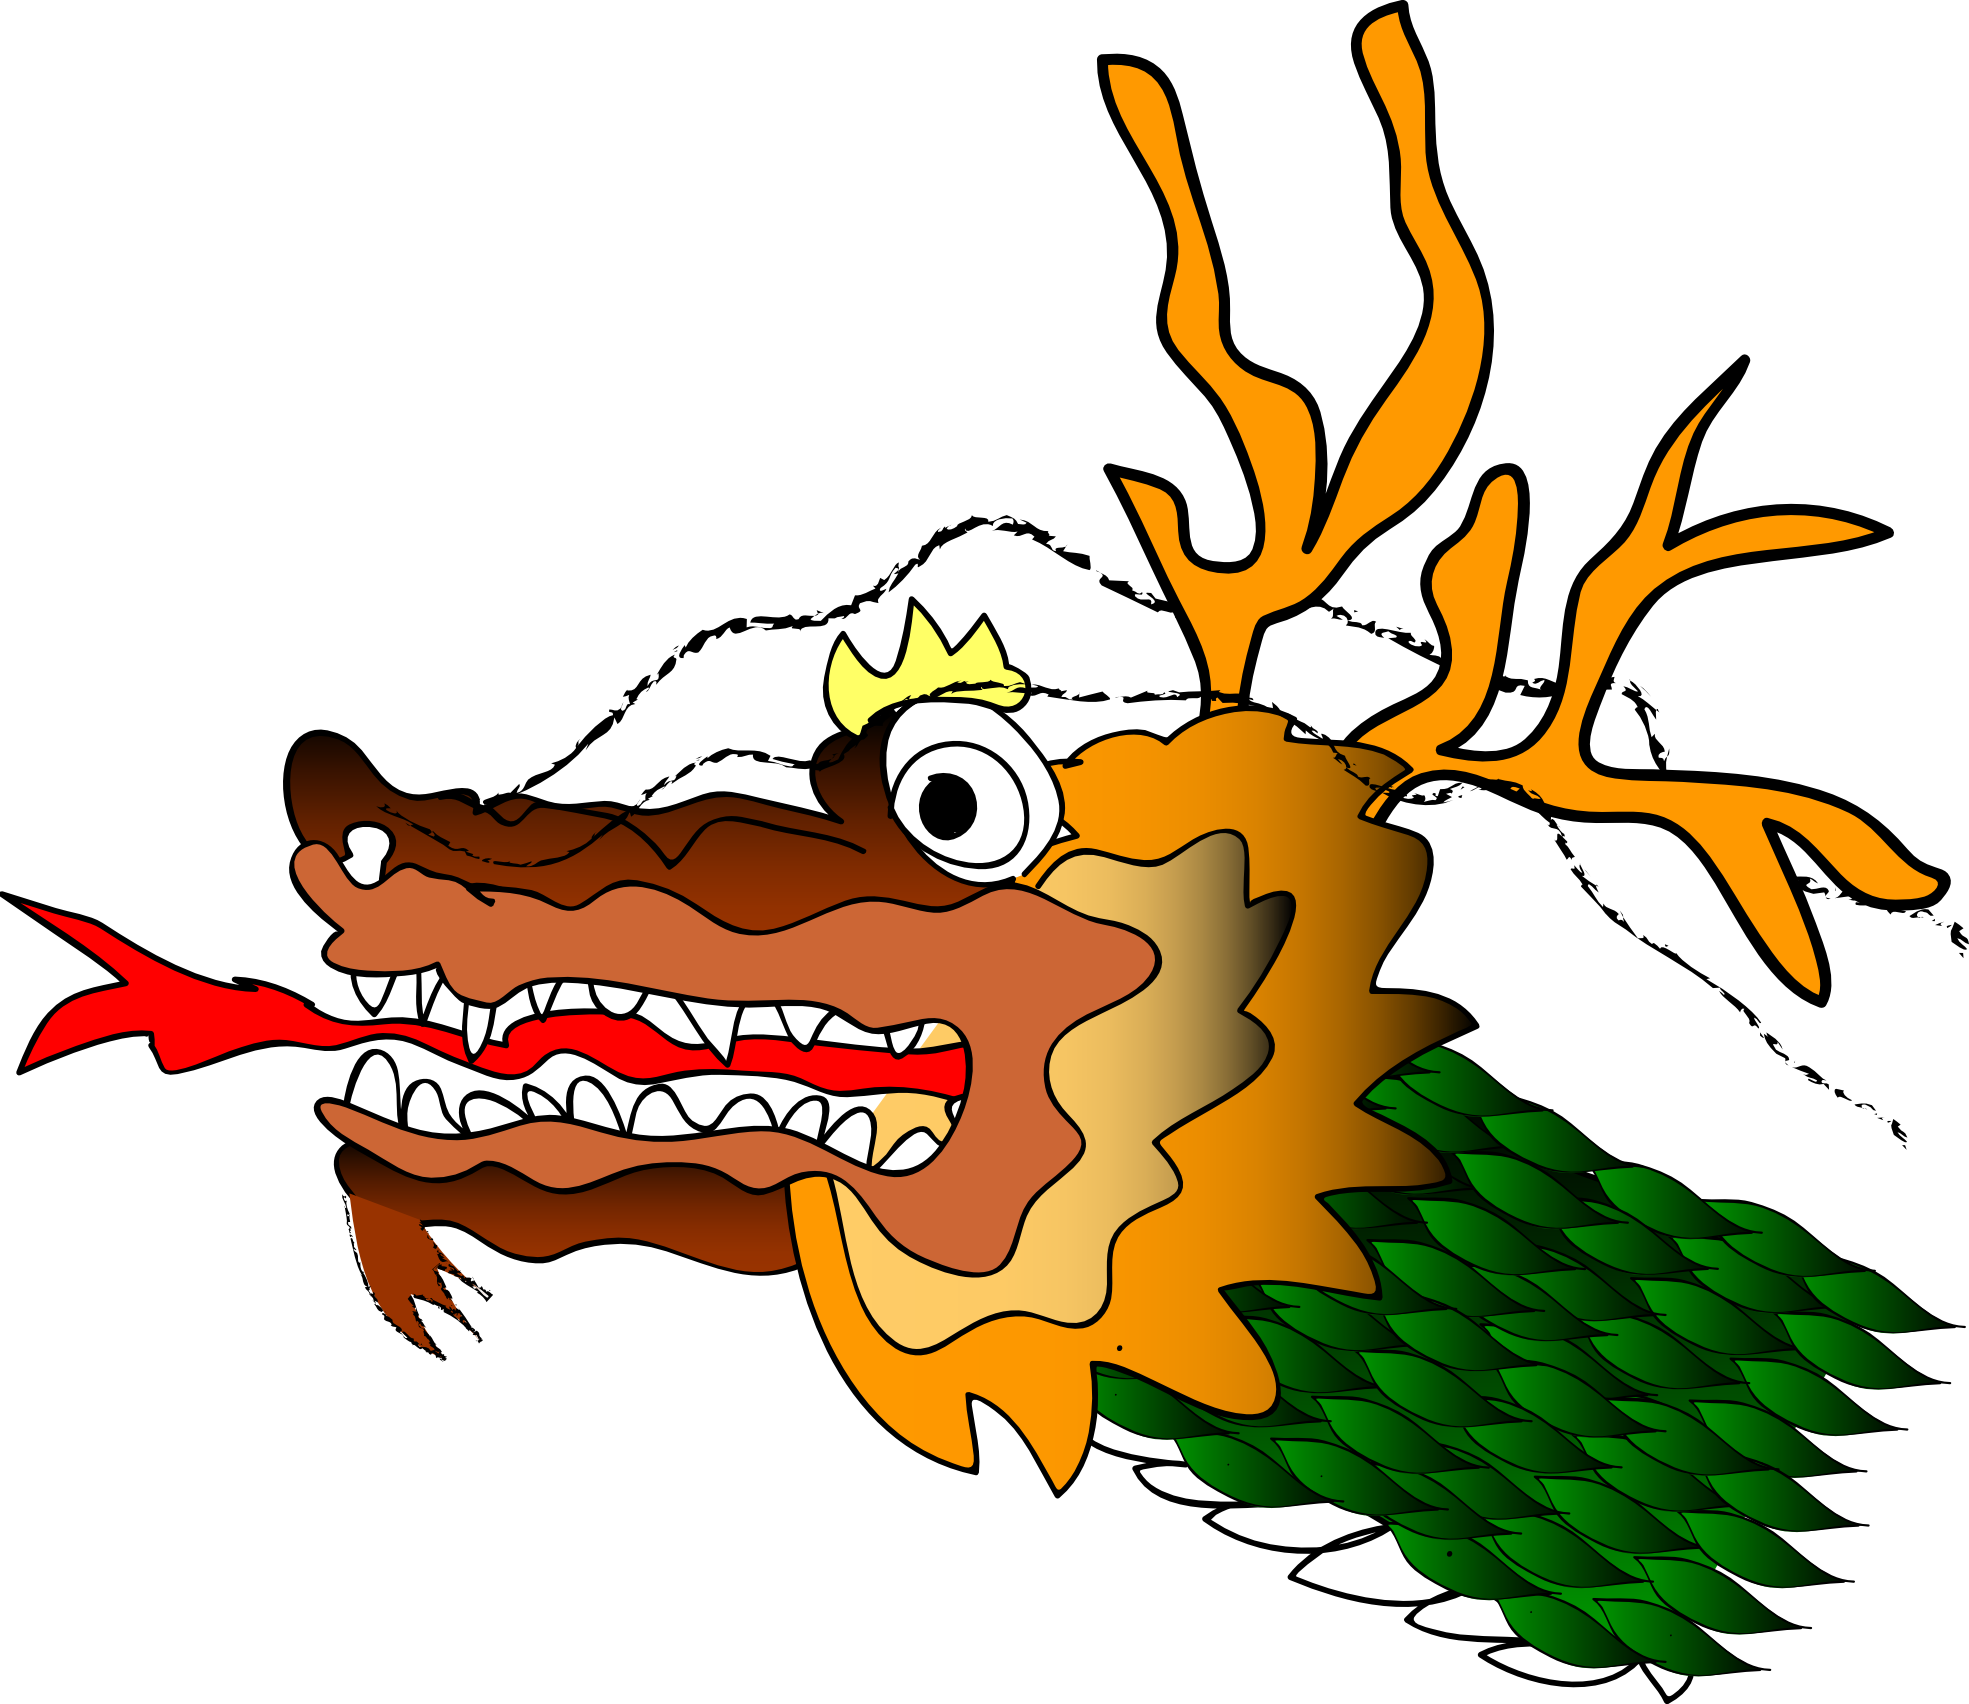 Chinese Dragon Cartoon Illustration PNG